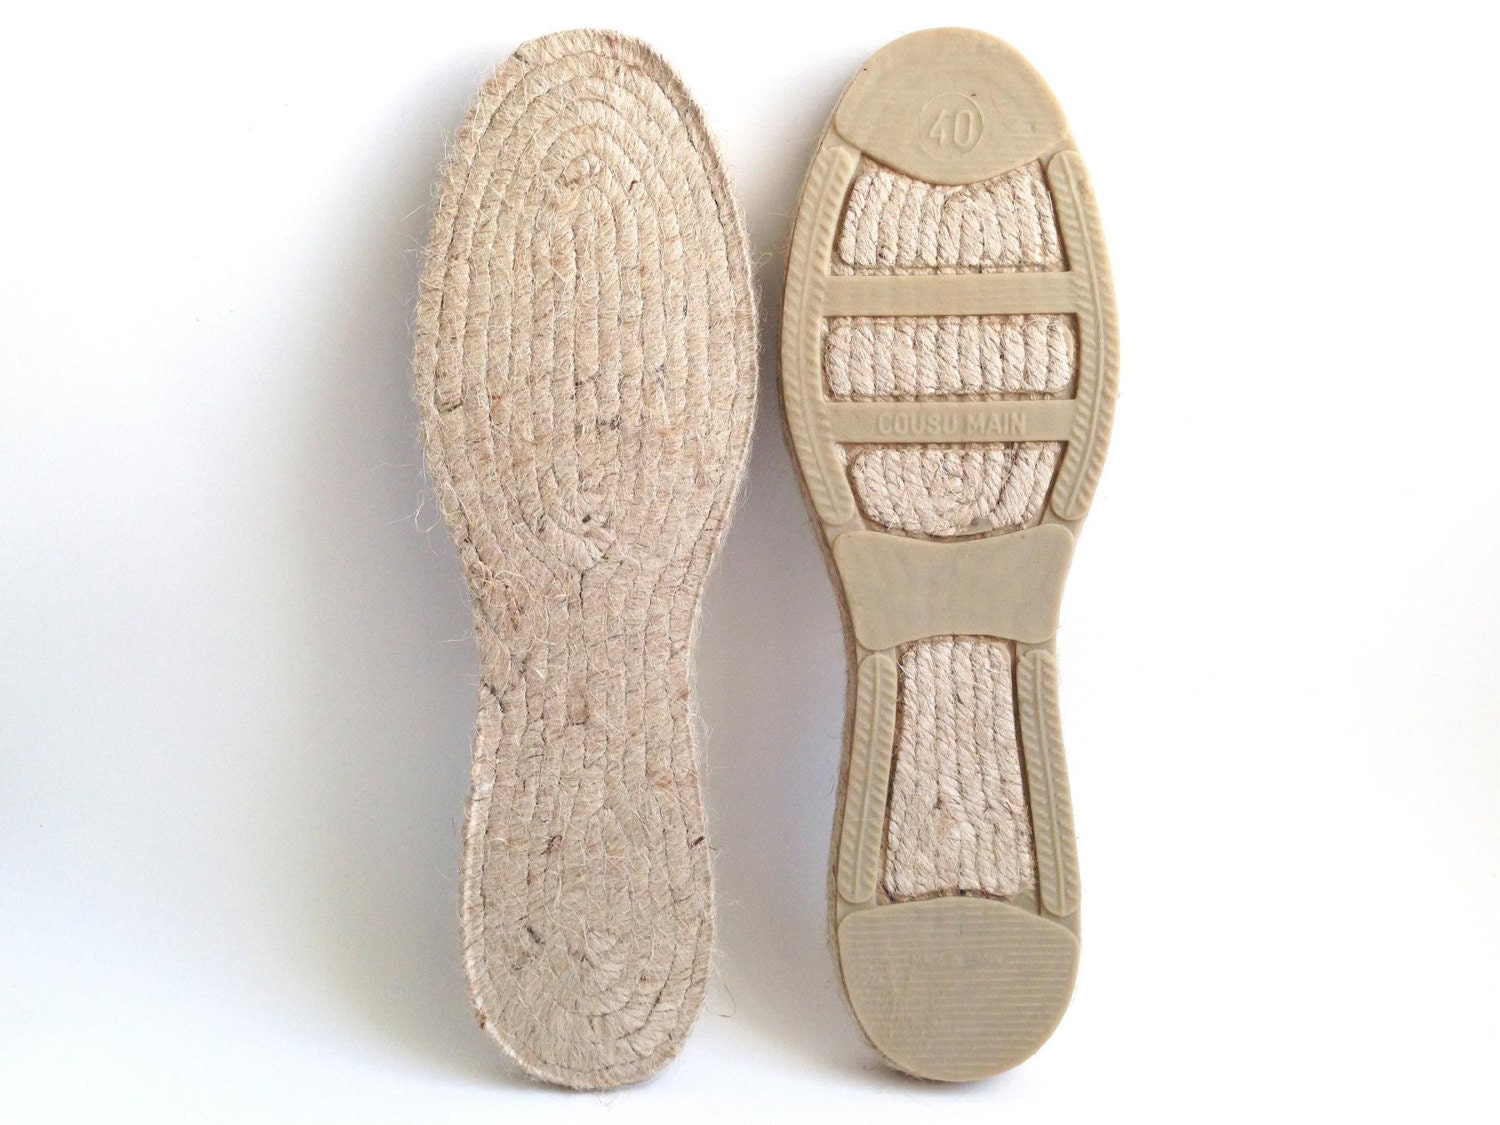 Wear the authentic Spanish espadrille soles the Mediterranean